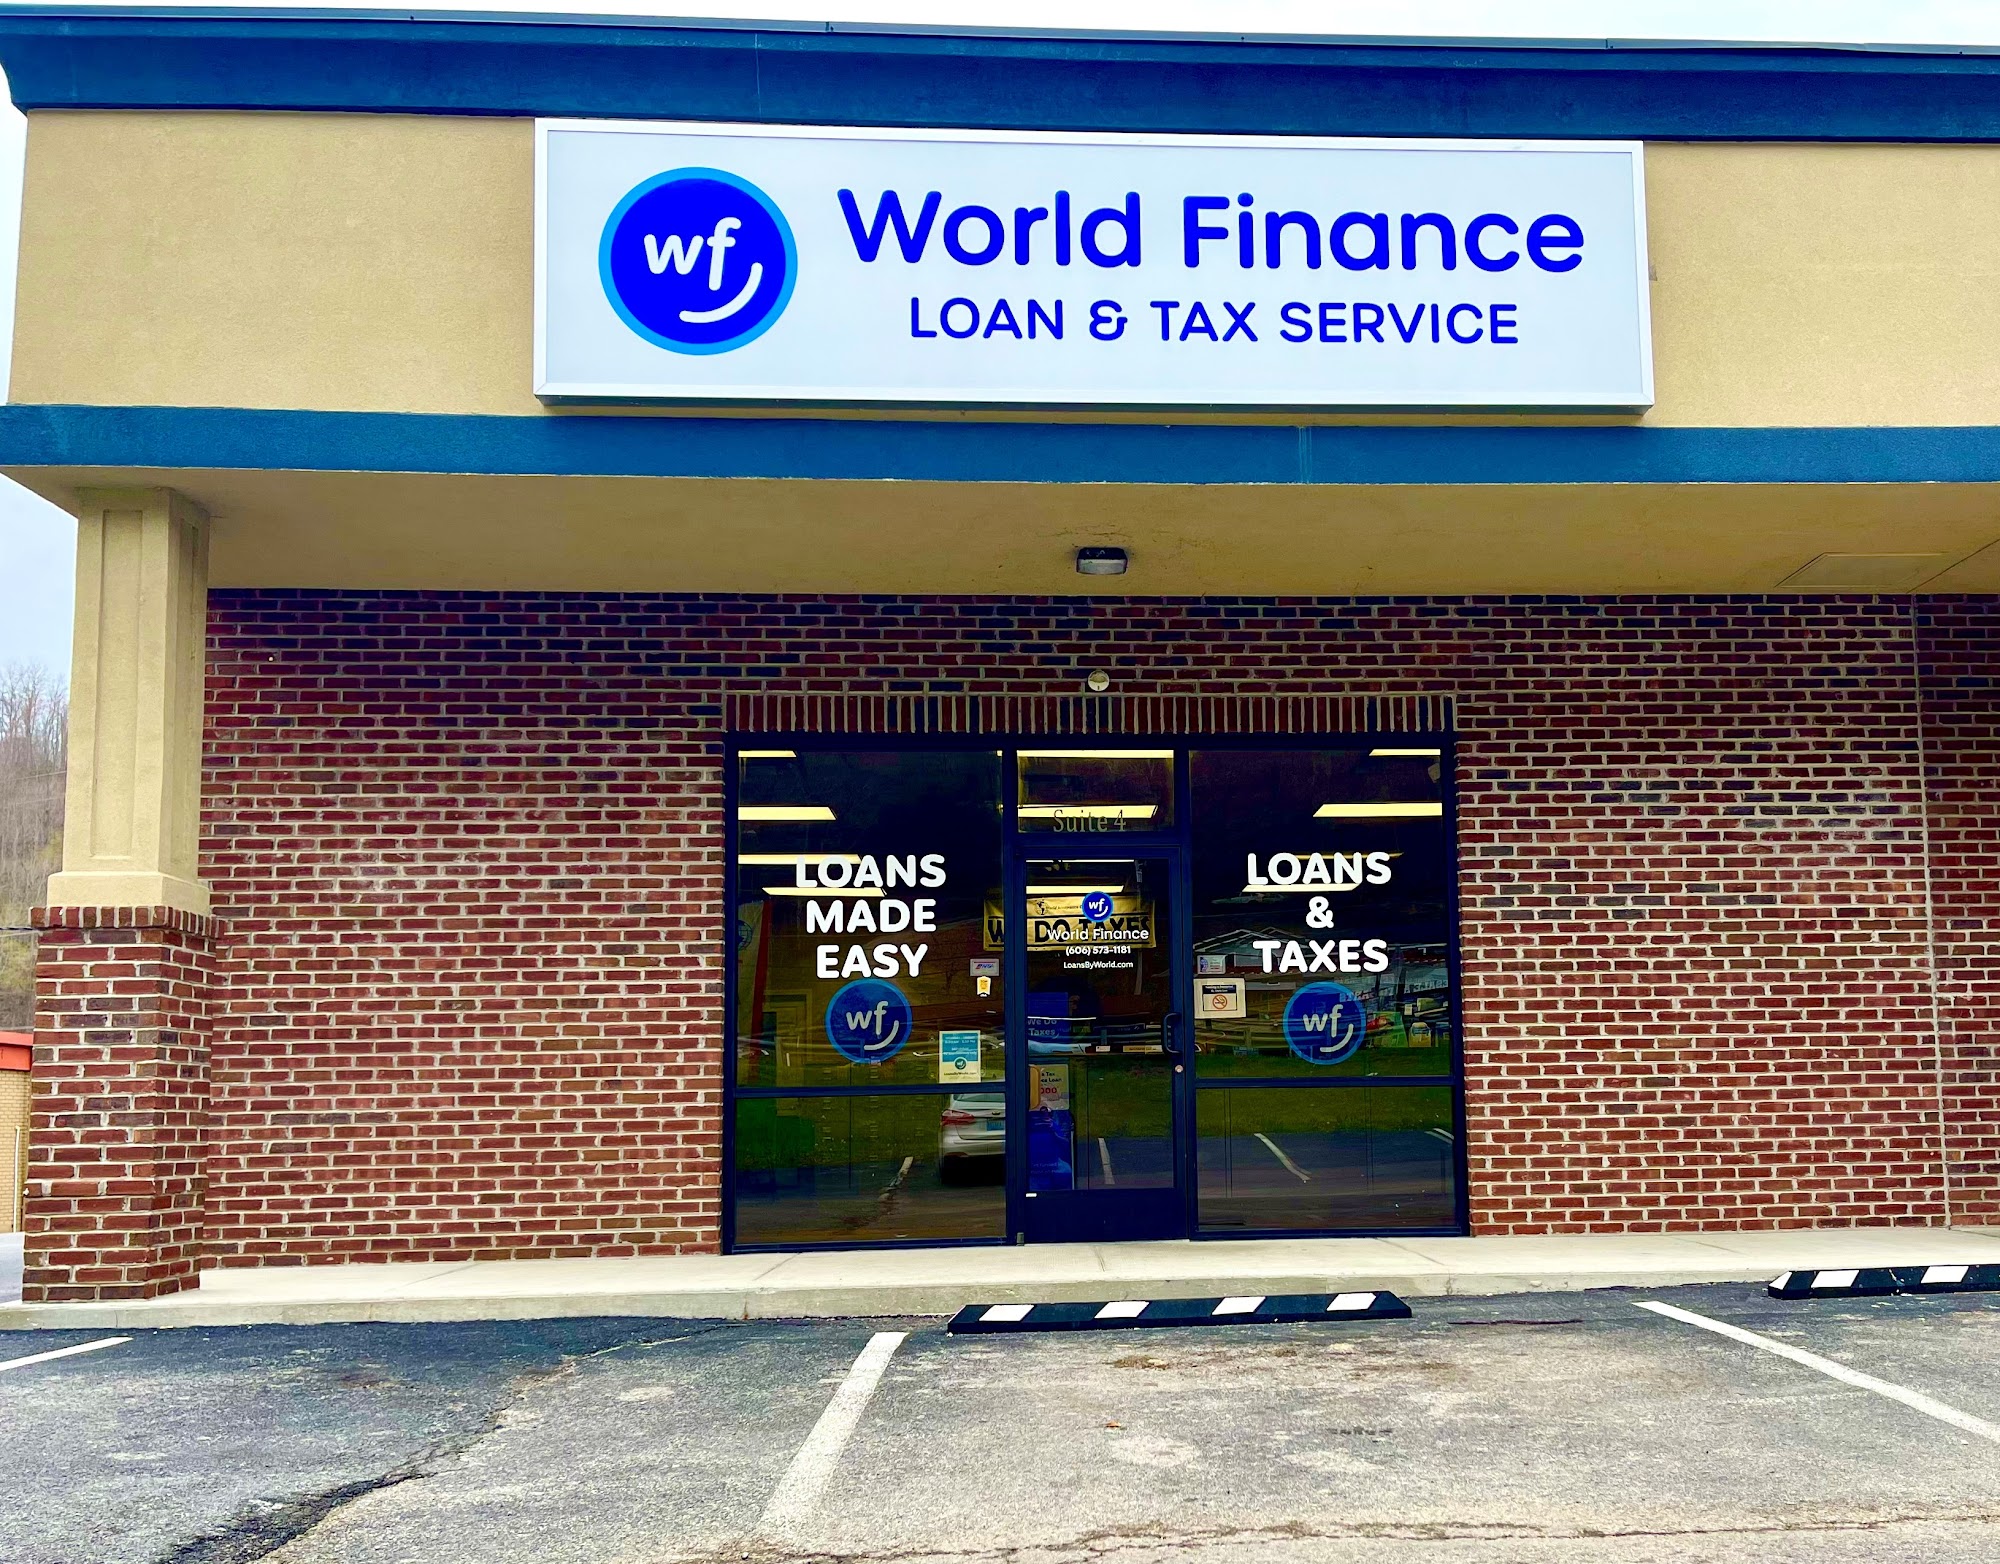 World Finance 1848 US-421, Harlan Kentucky 40831